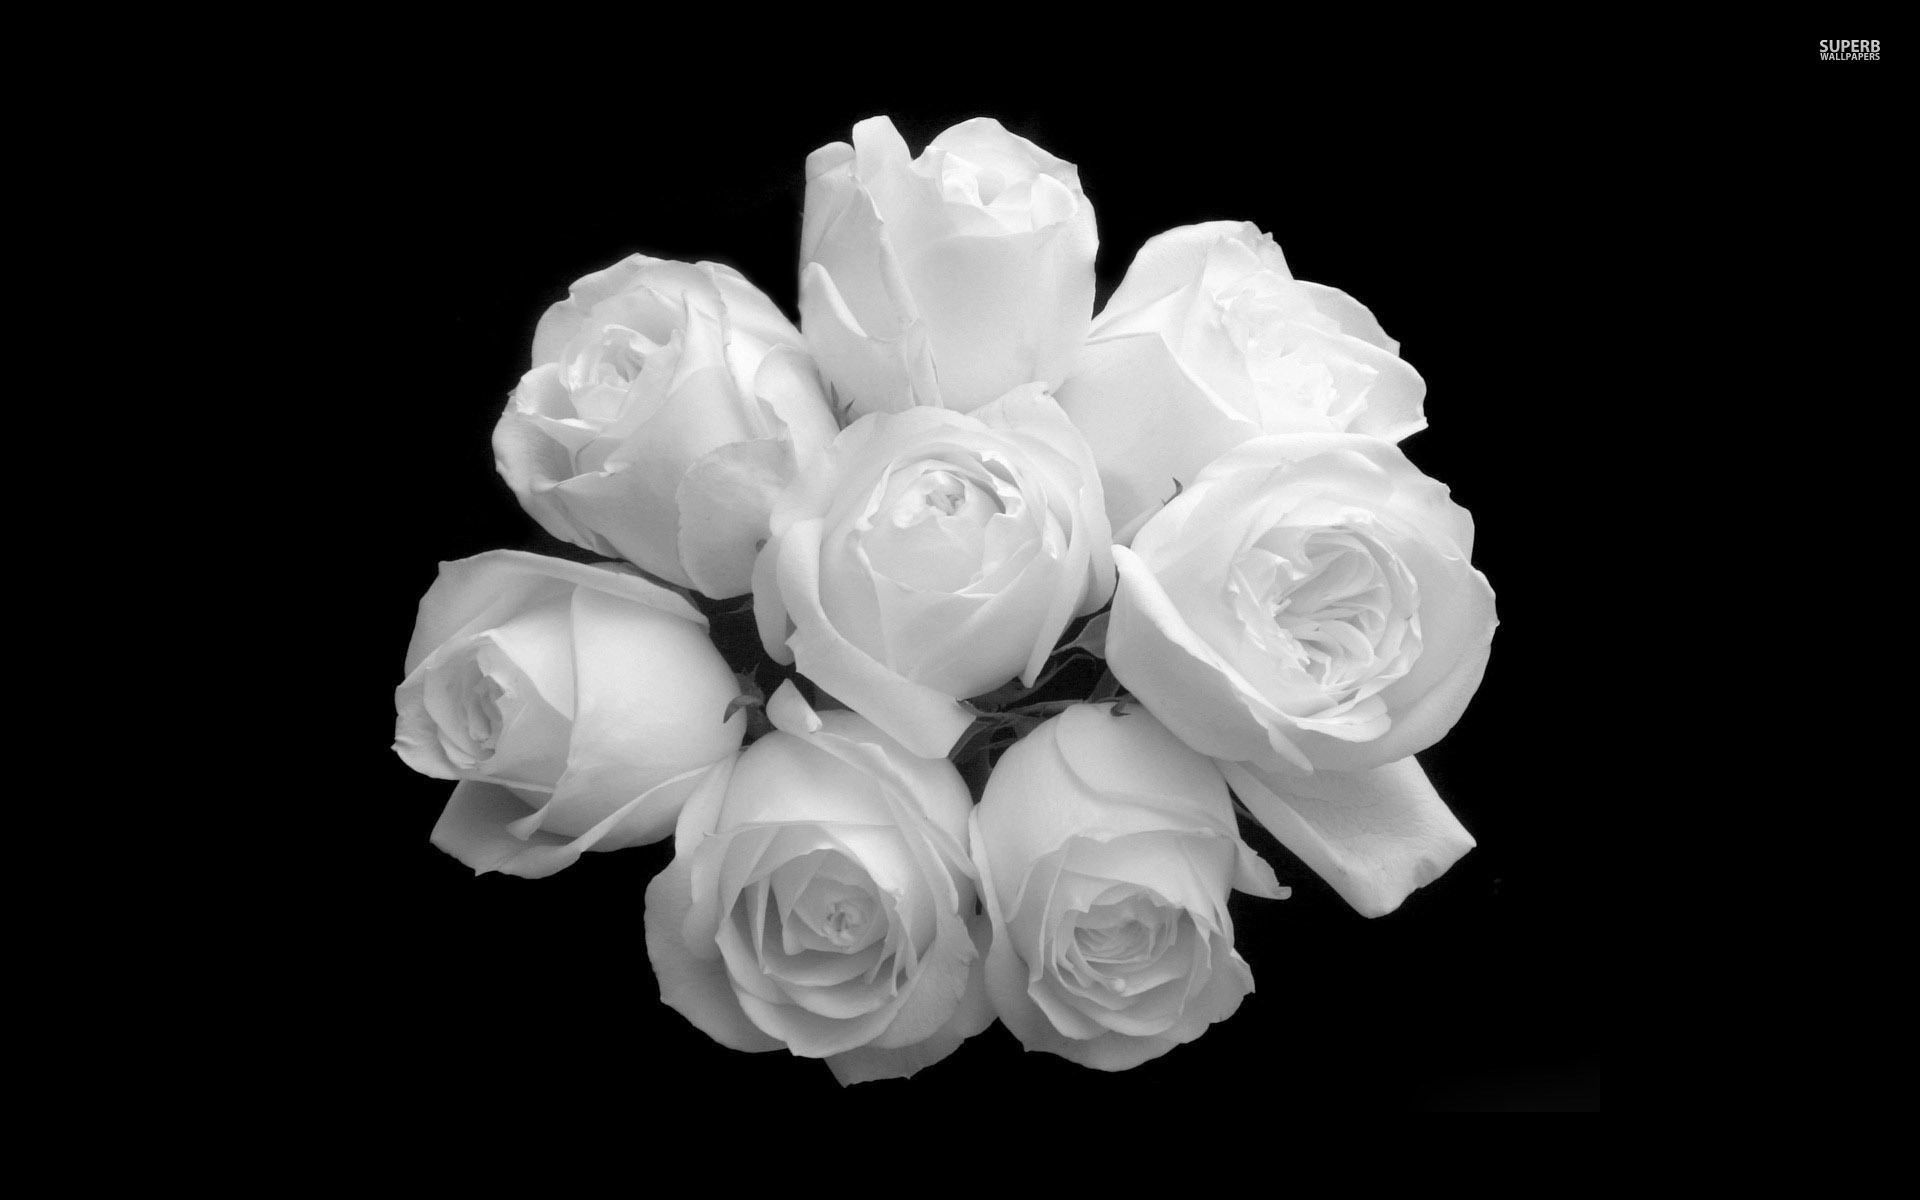 Black and White Rose Wallpaper